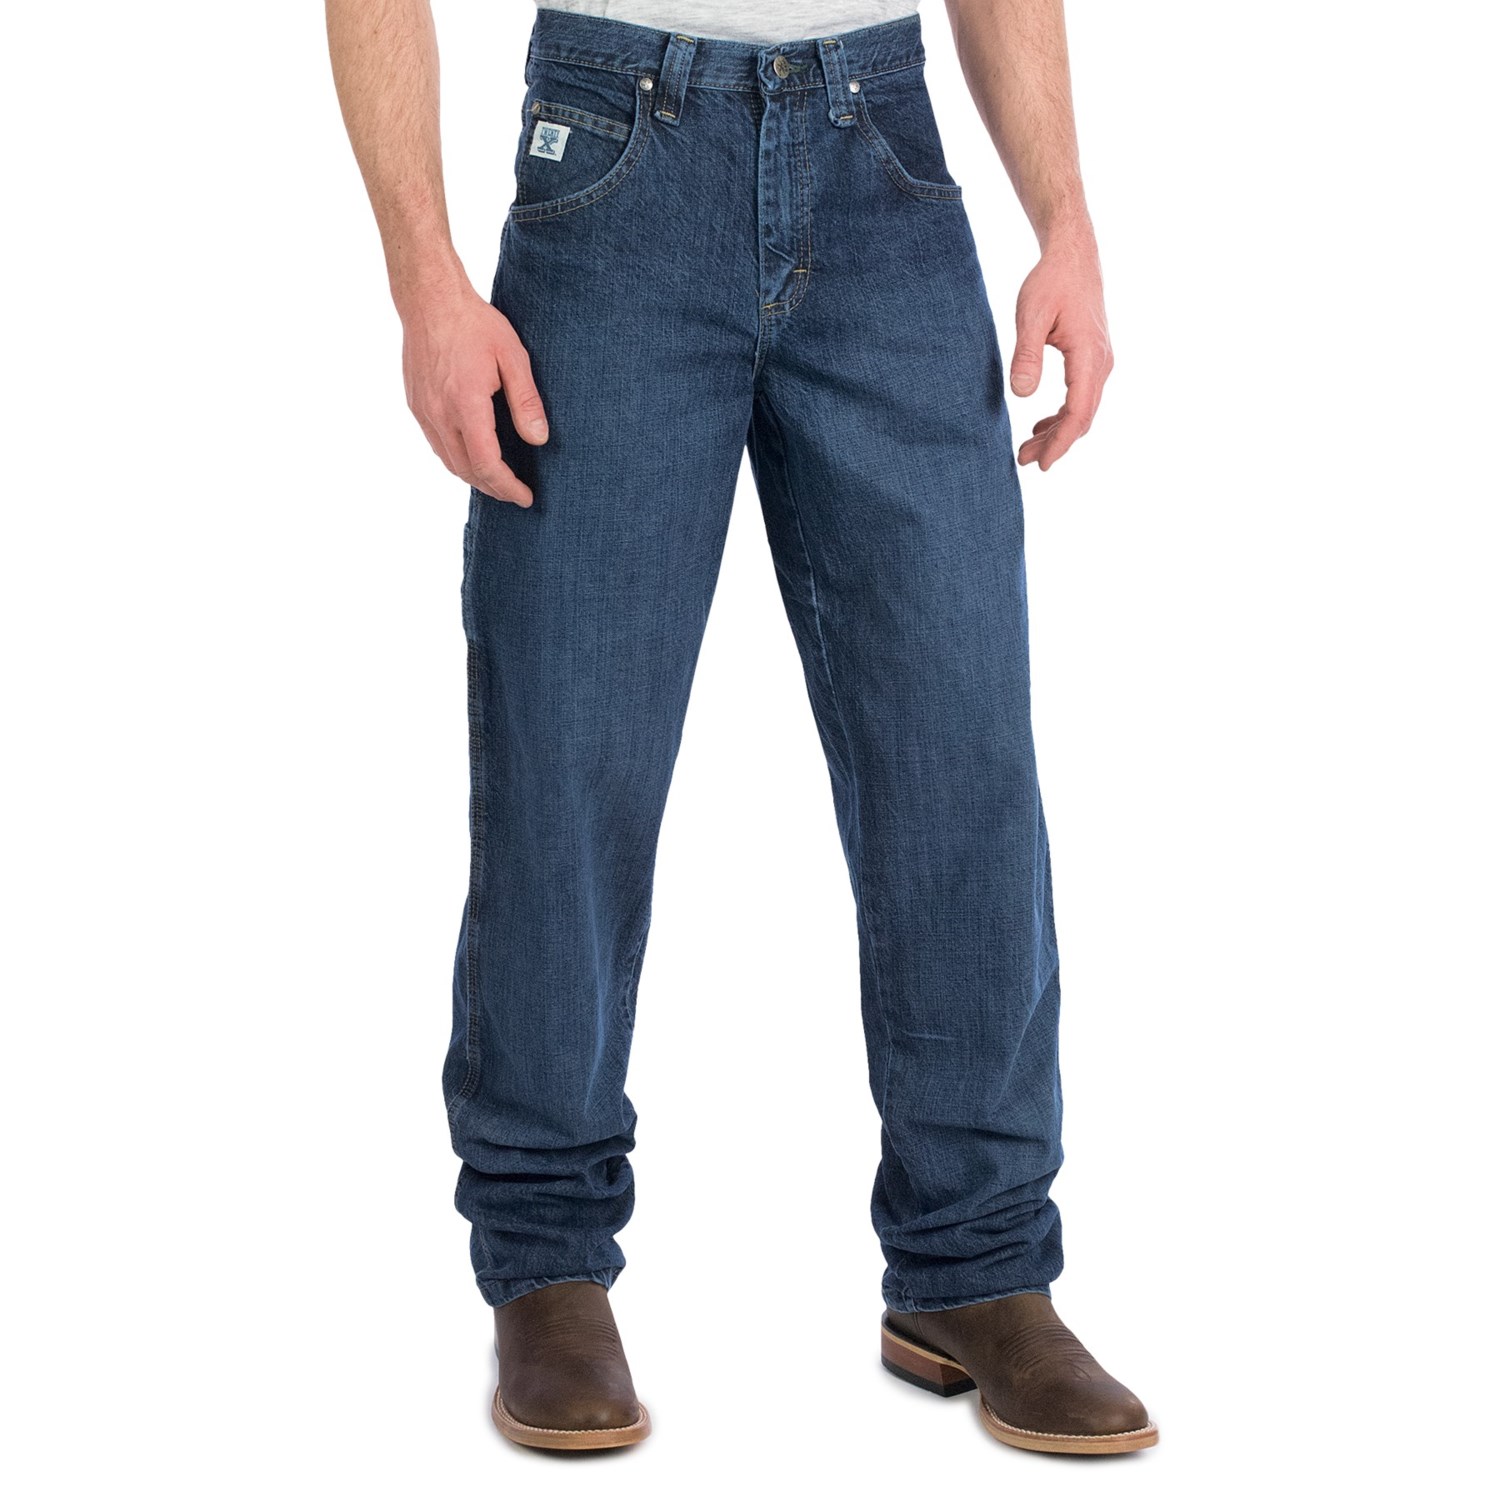 Wrangler 20X Extreme Utility Jeans (For Men) 5916C - Save 37%